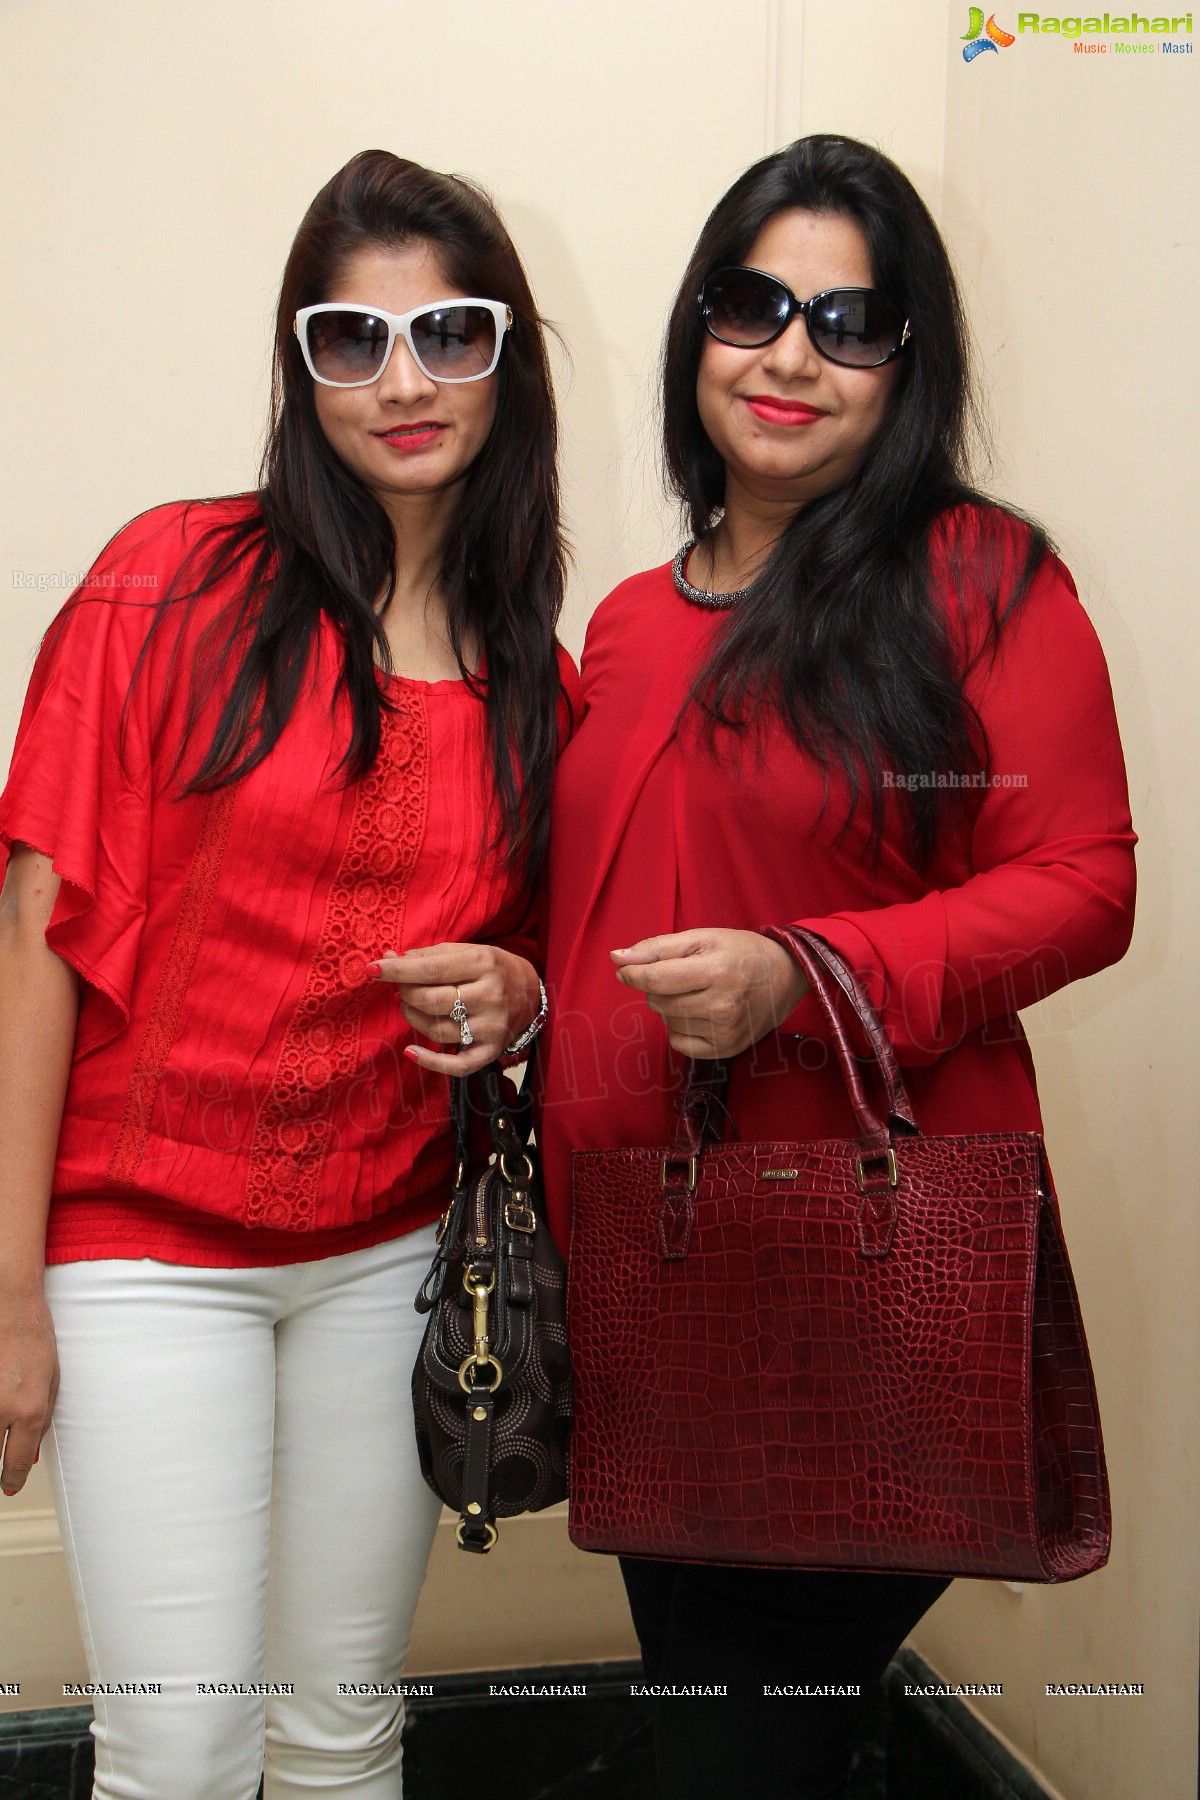 Hyderabad Kakatiya Ladies Club Christmas Celebrations 2013